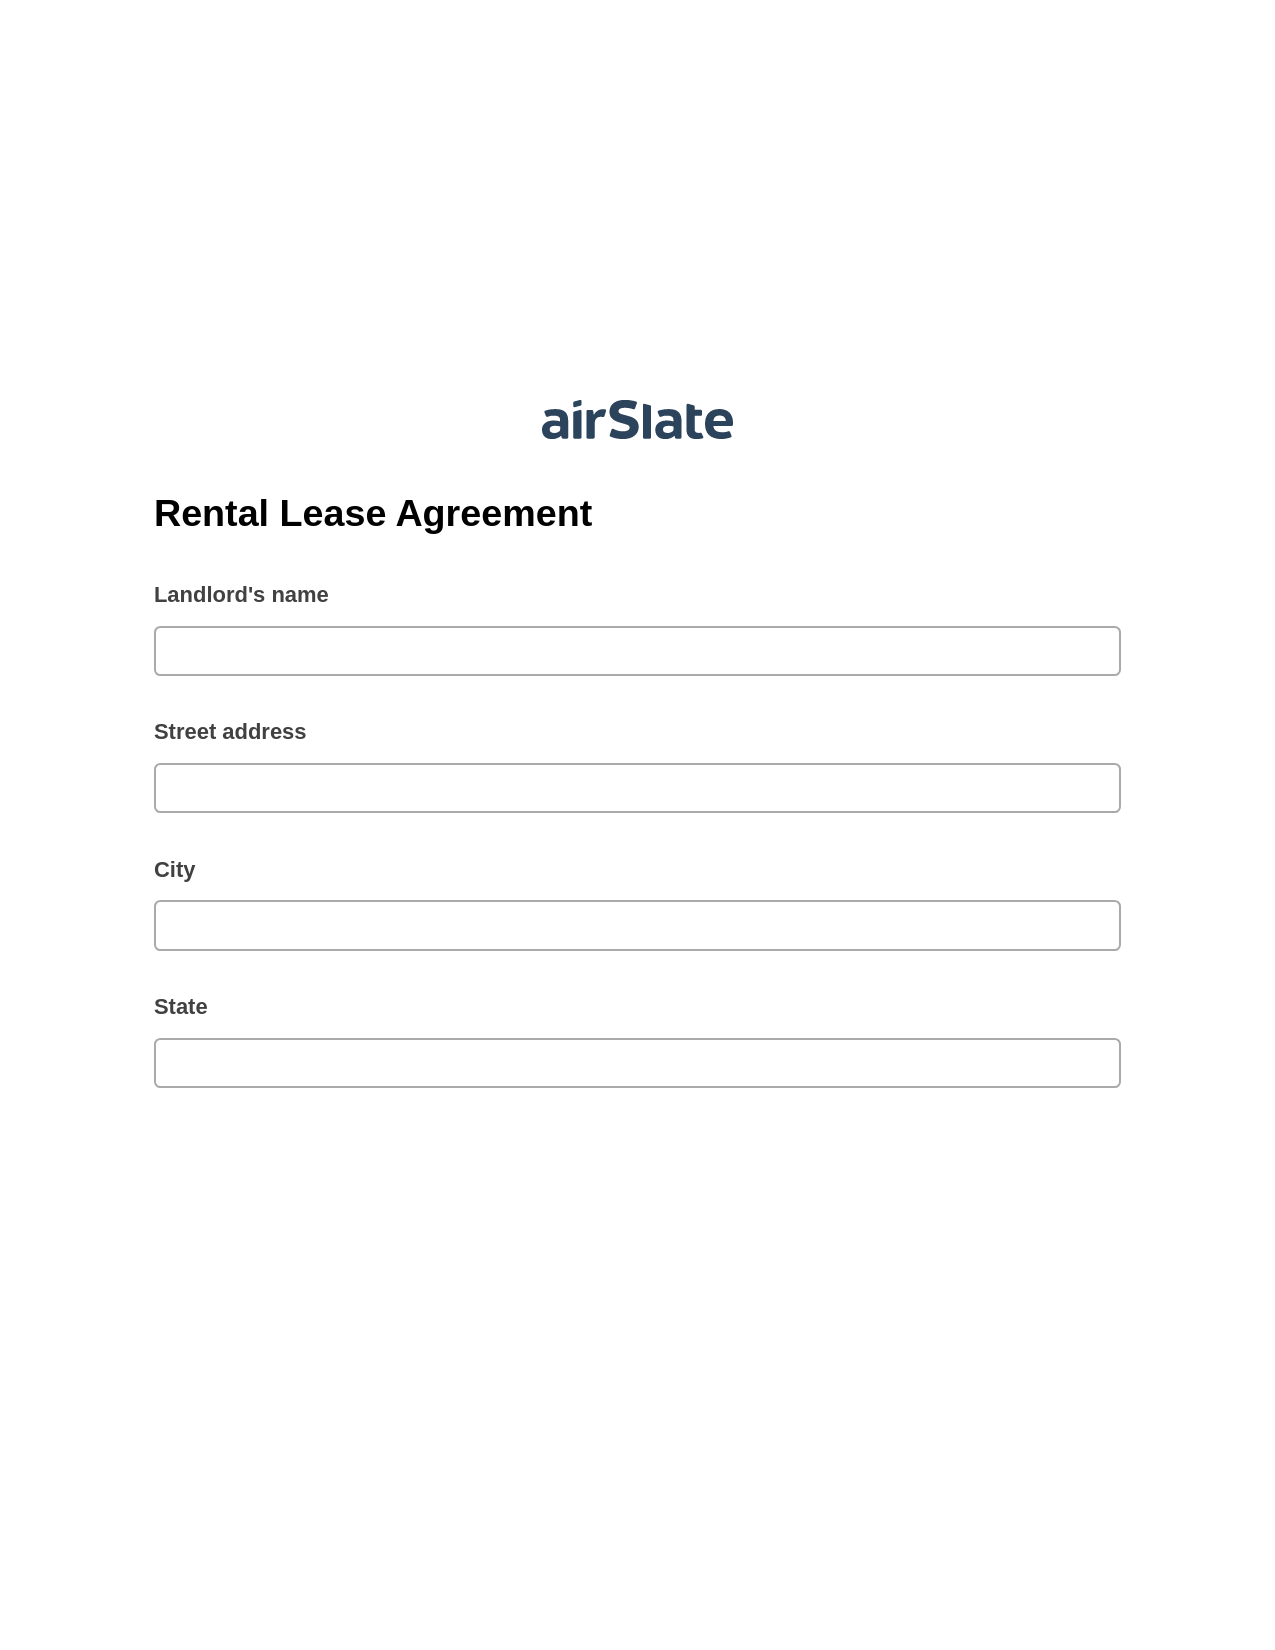 Multirole Rental Lease Agreement Pre-fill from Google Sheet Dropdown Options Bot, Invoke Salesforce Process Bot, Box Bot